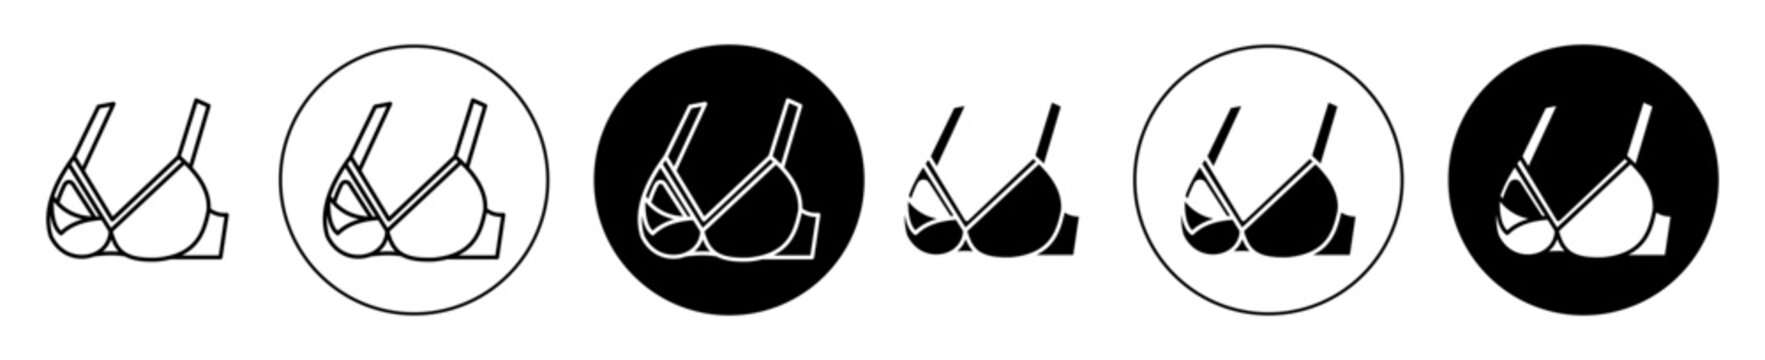 nursing bra icon set. summer bra vector symbol in black filled and outlined style.